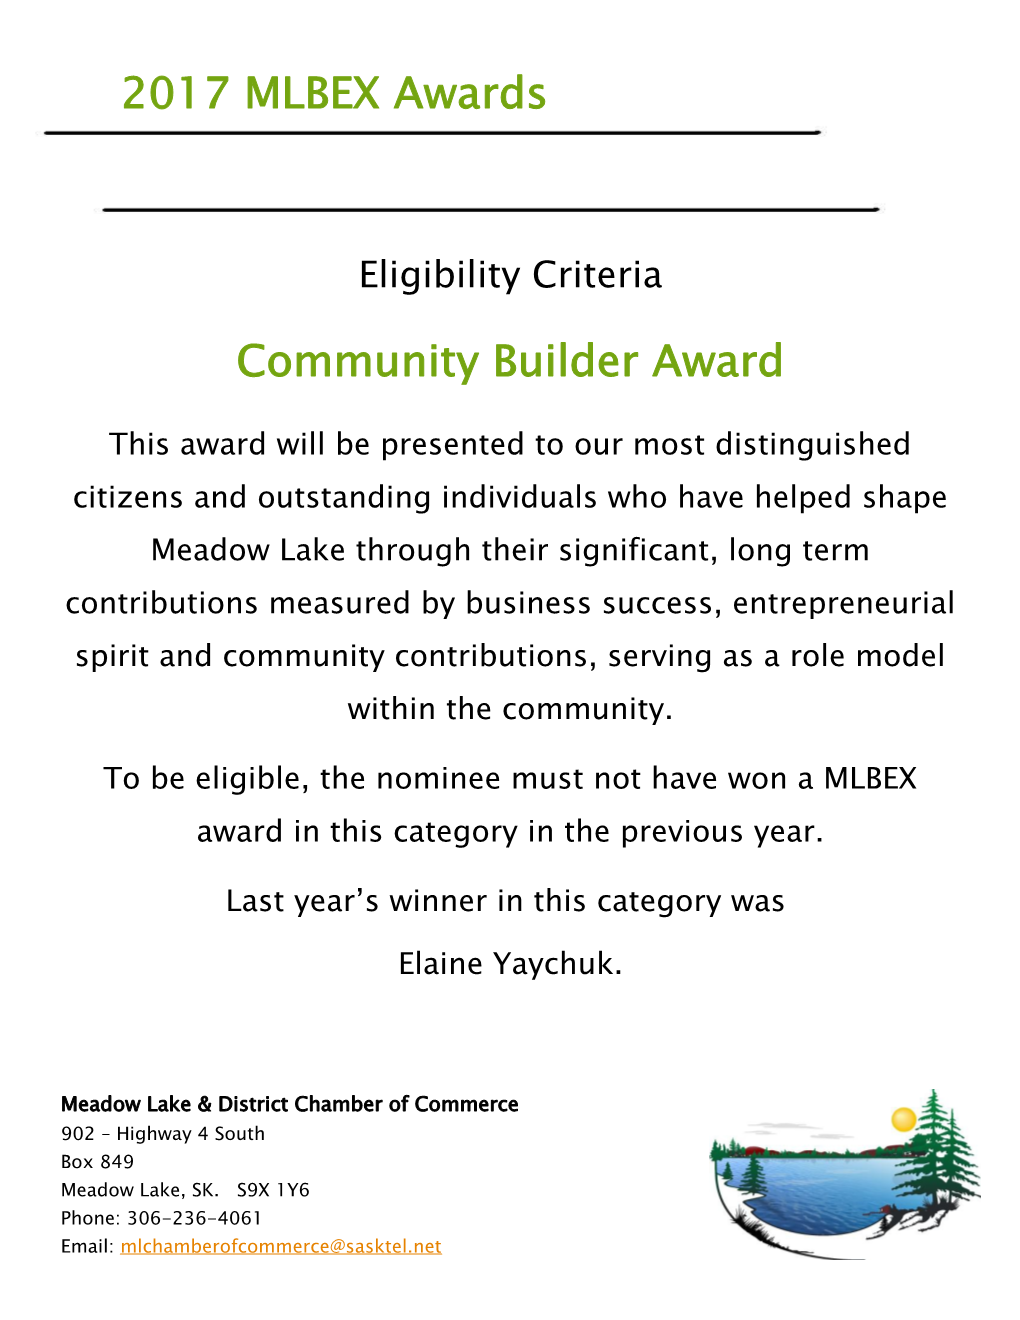 Community Builder Award